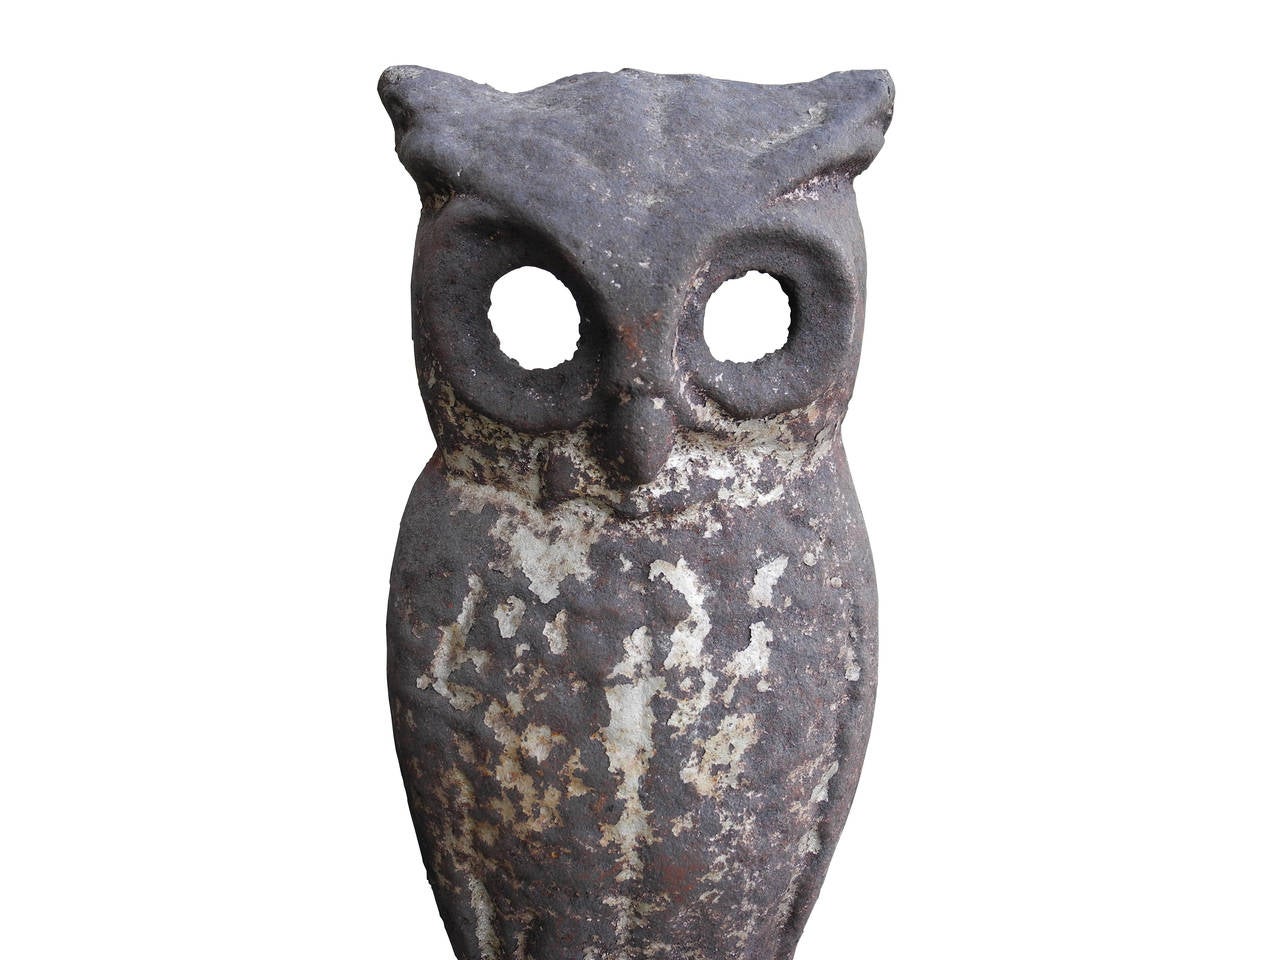 American furniture or Folk Art, cast iron owl andirons. 
The owls measure 14